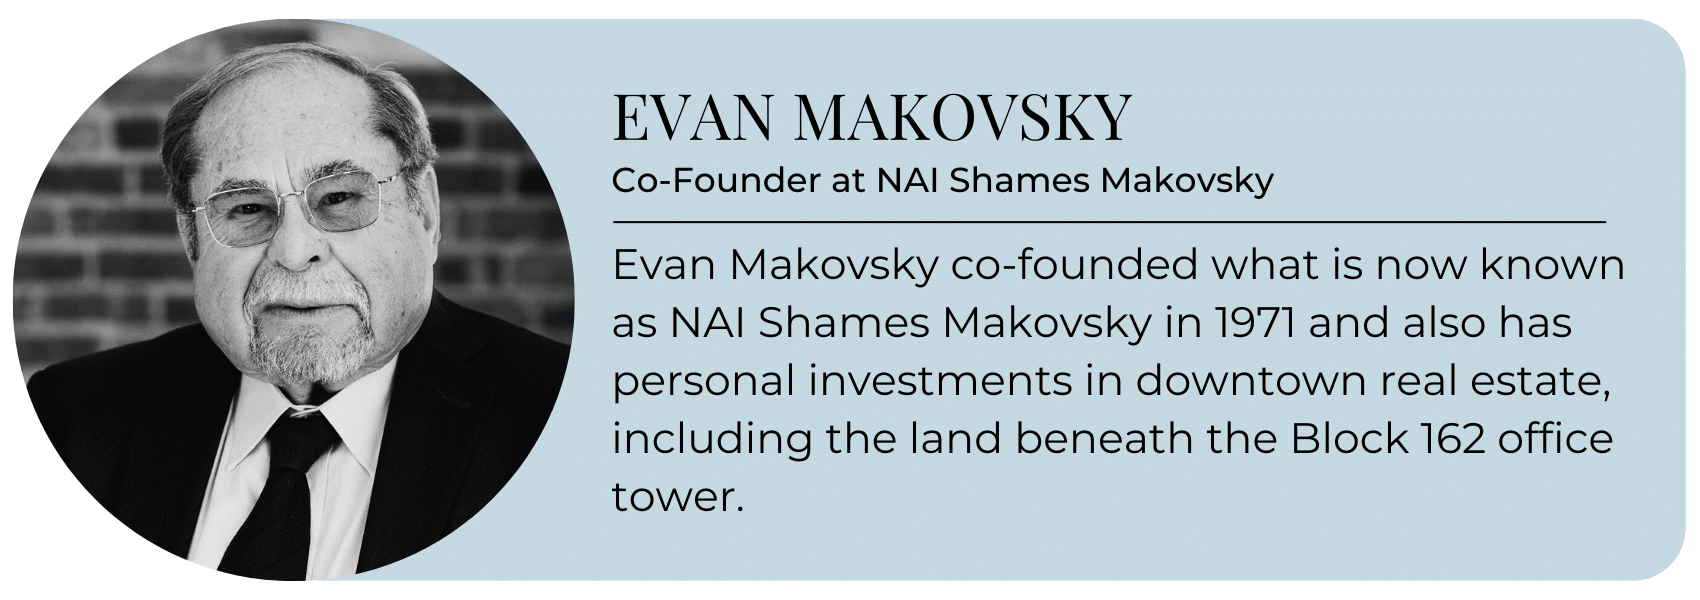 Evan Makovsky